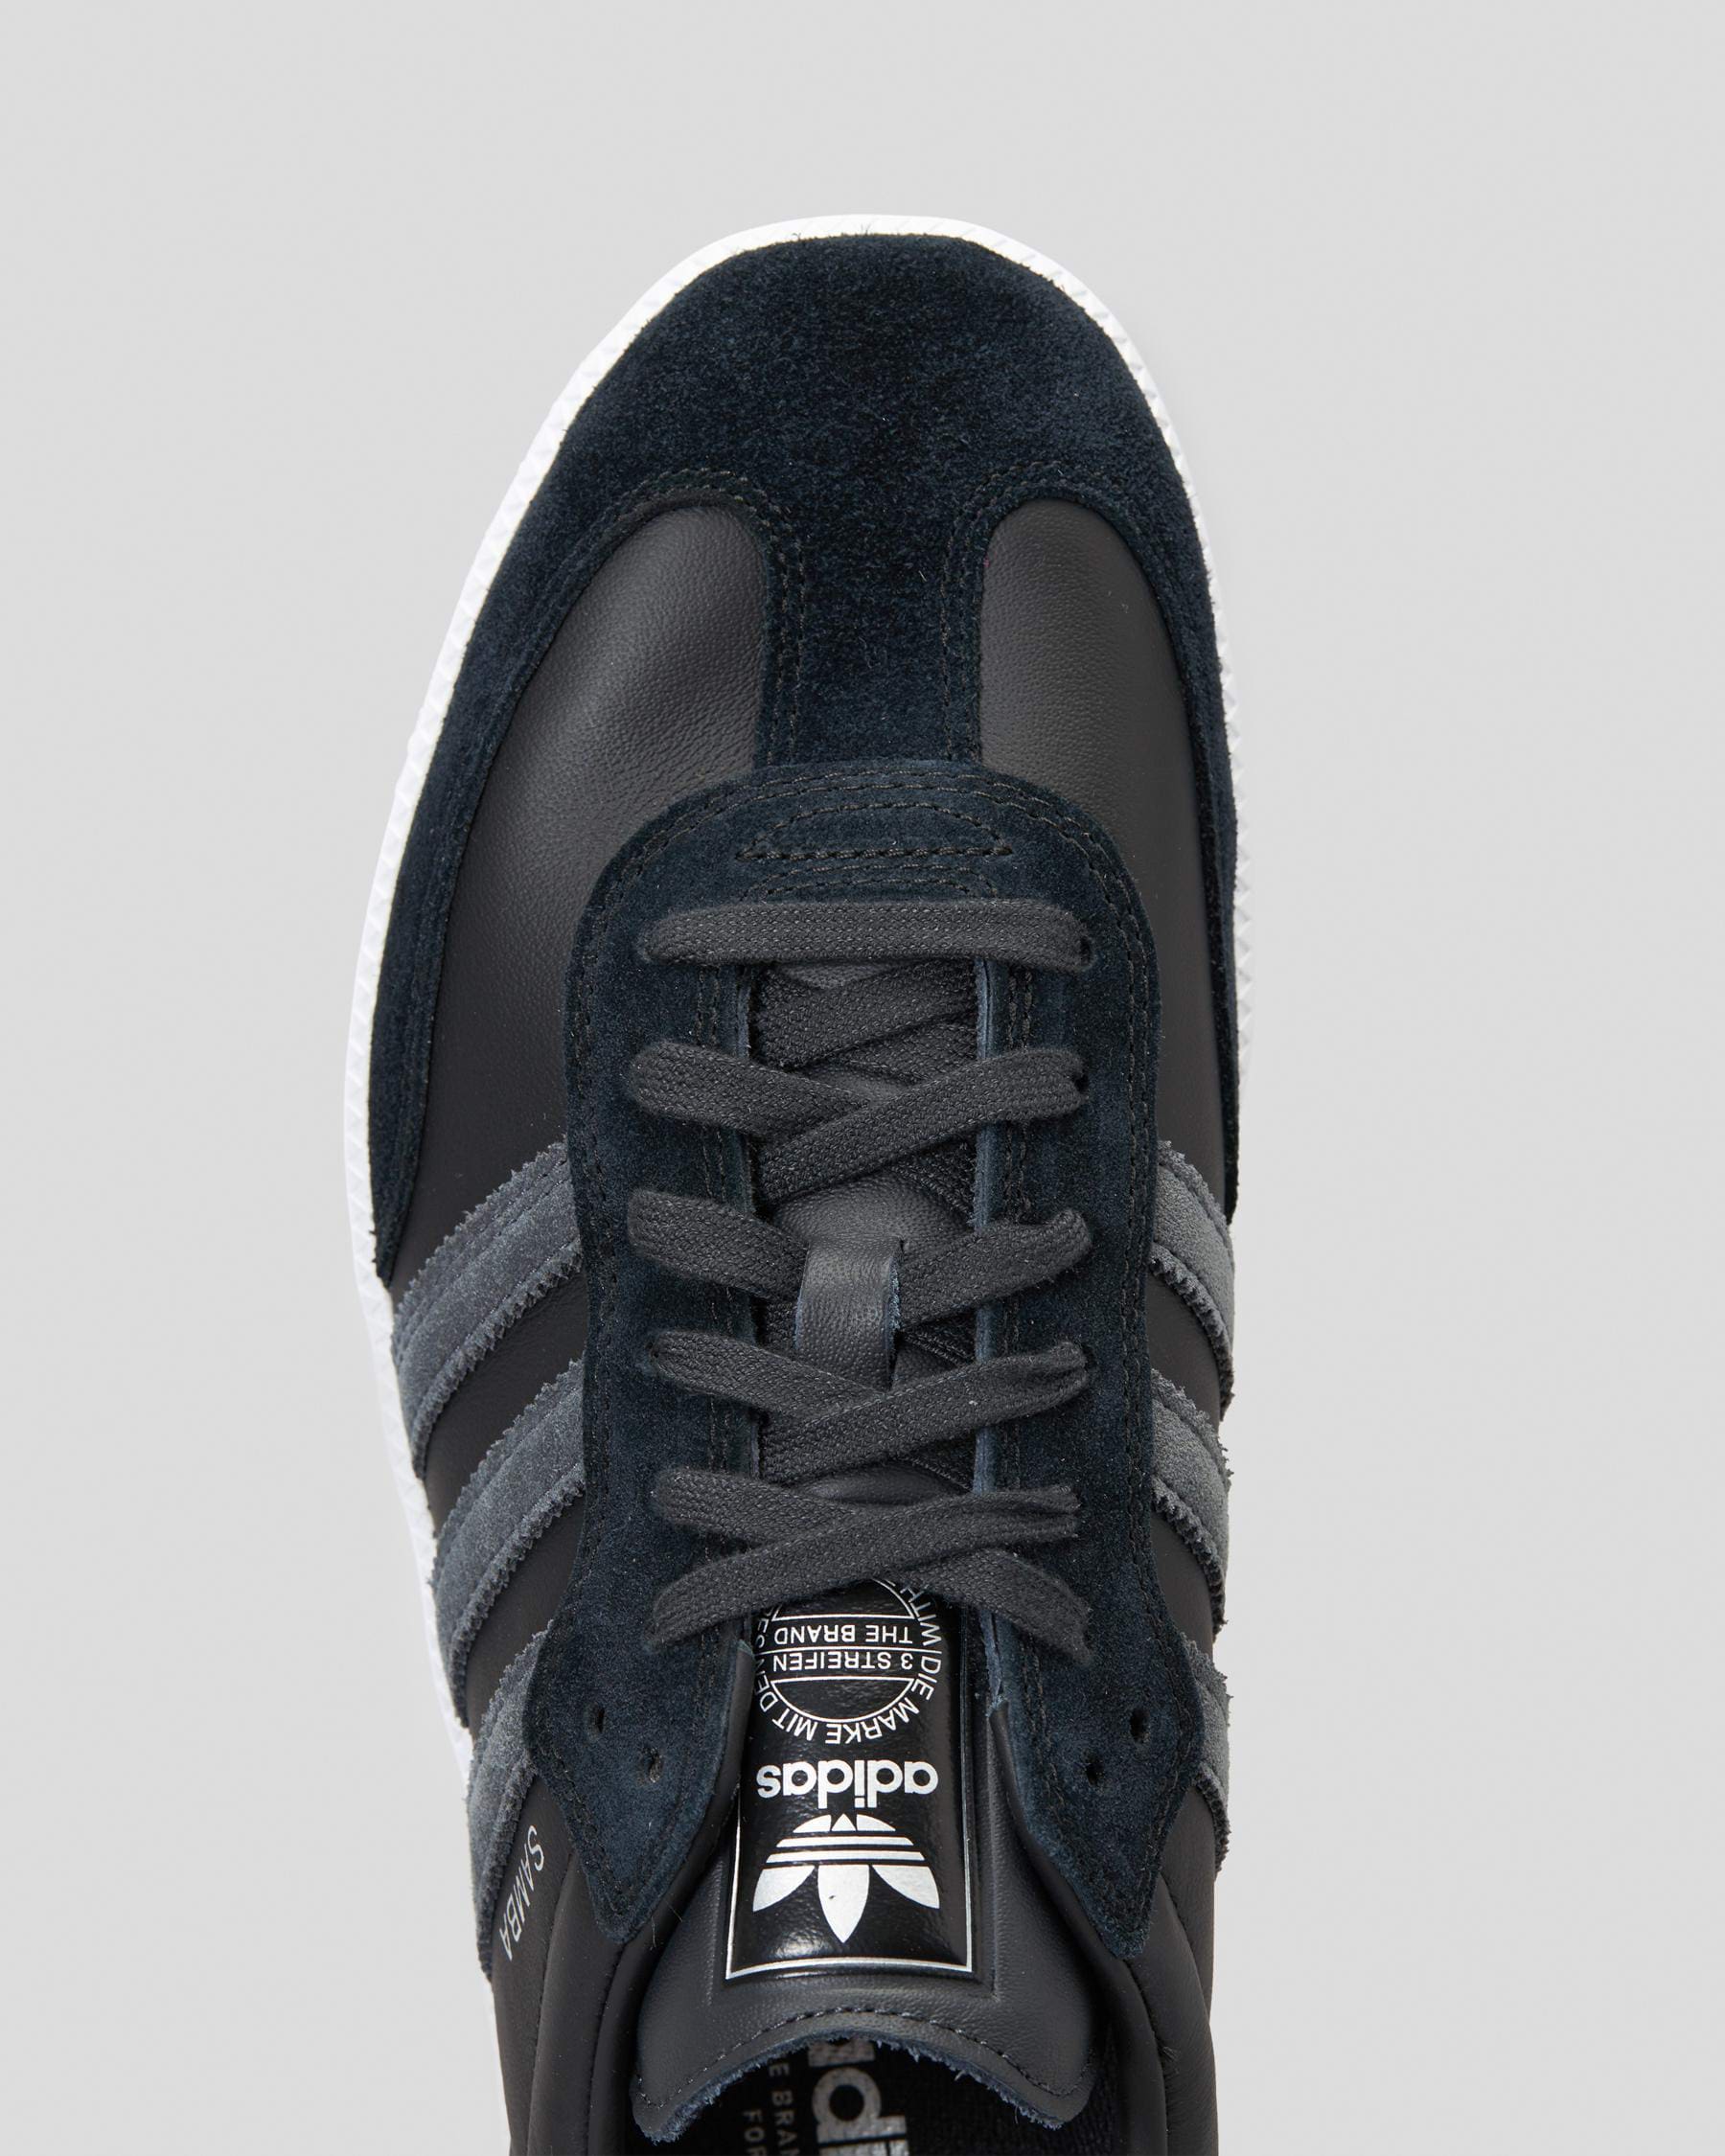 Adidas Samba Adv Shoes In Core Black/carbon/silver - FREE